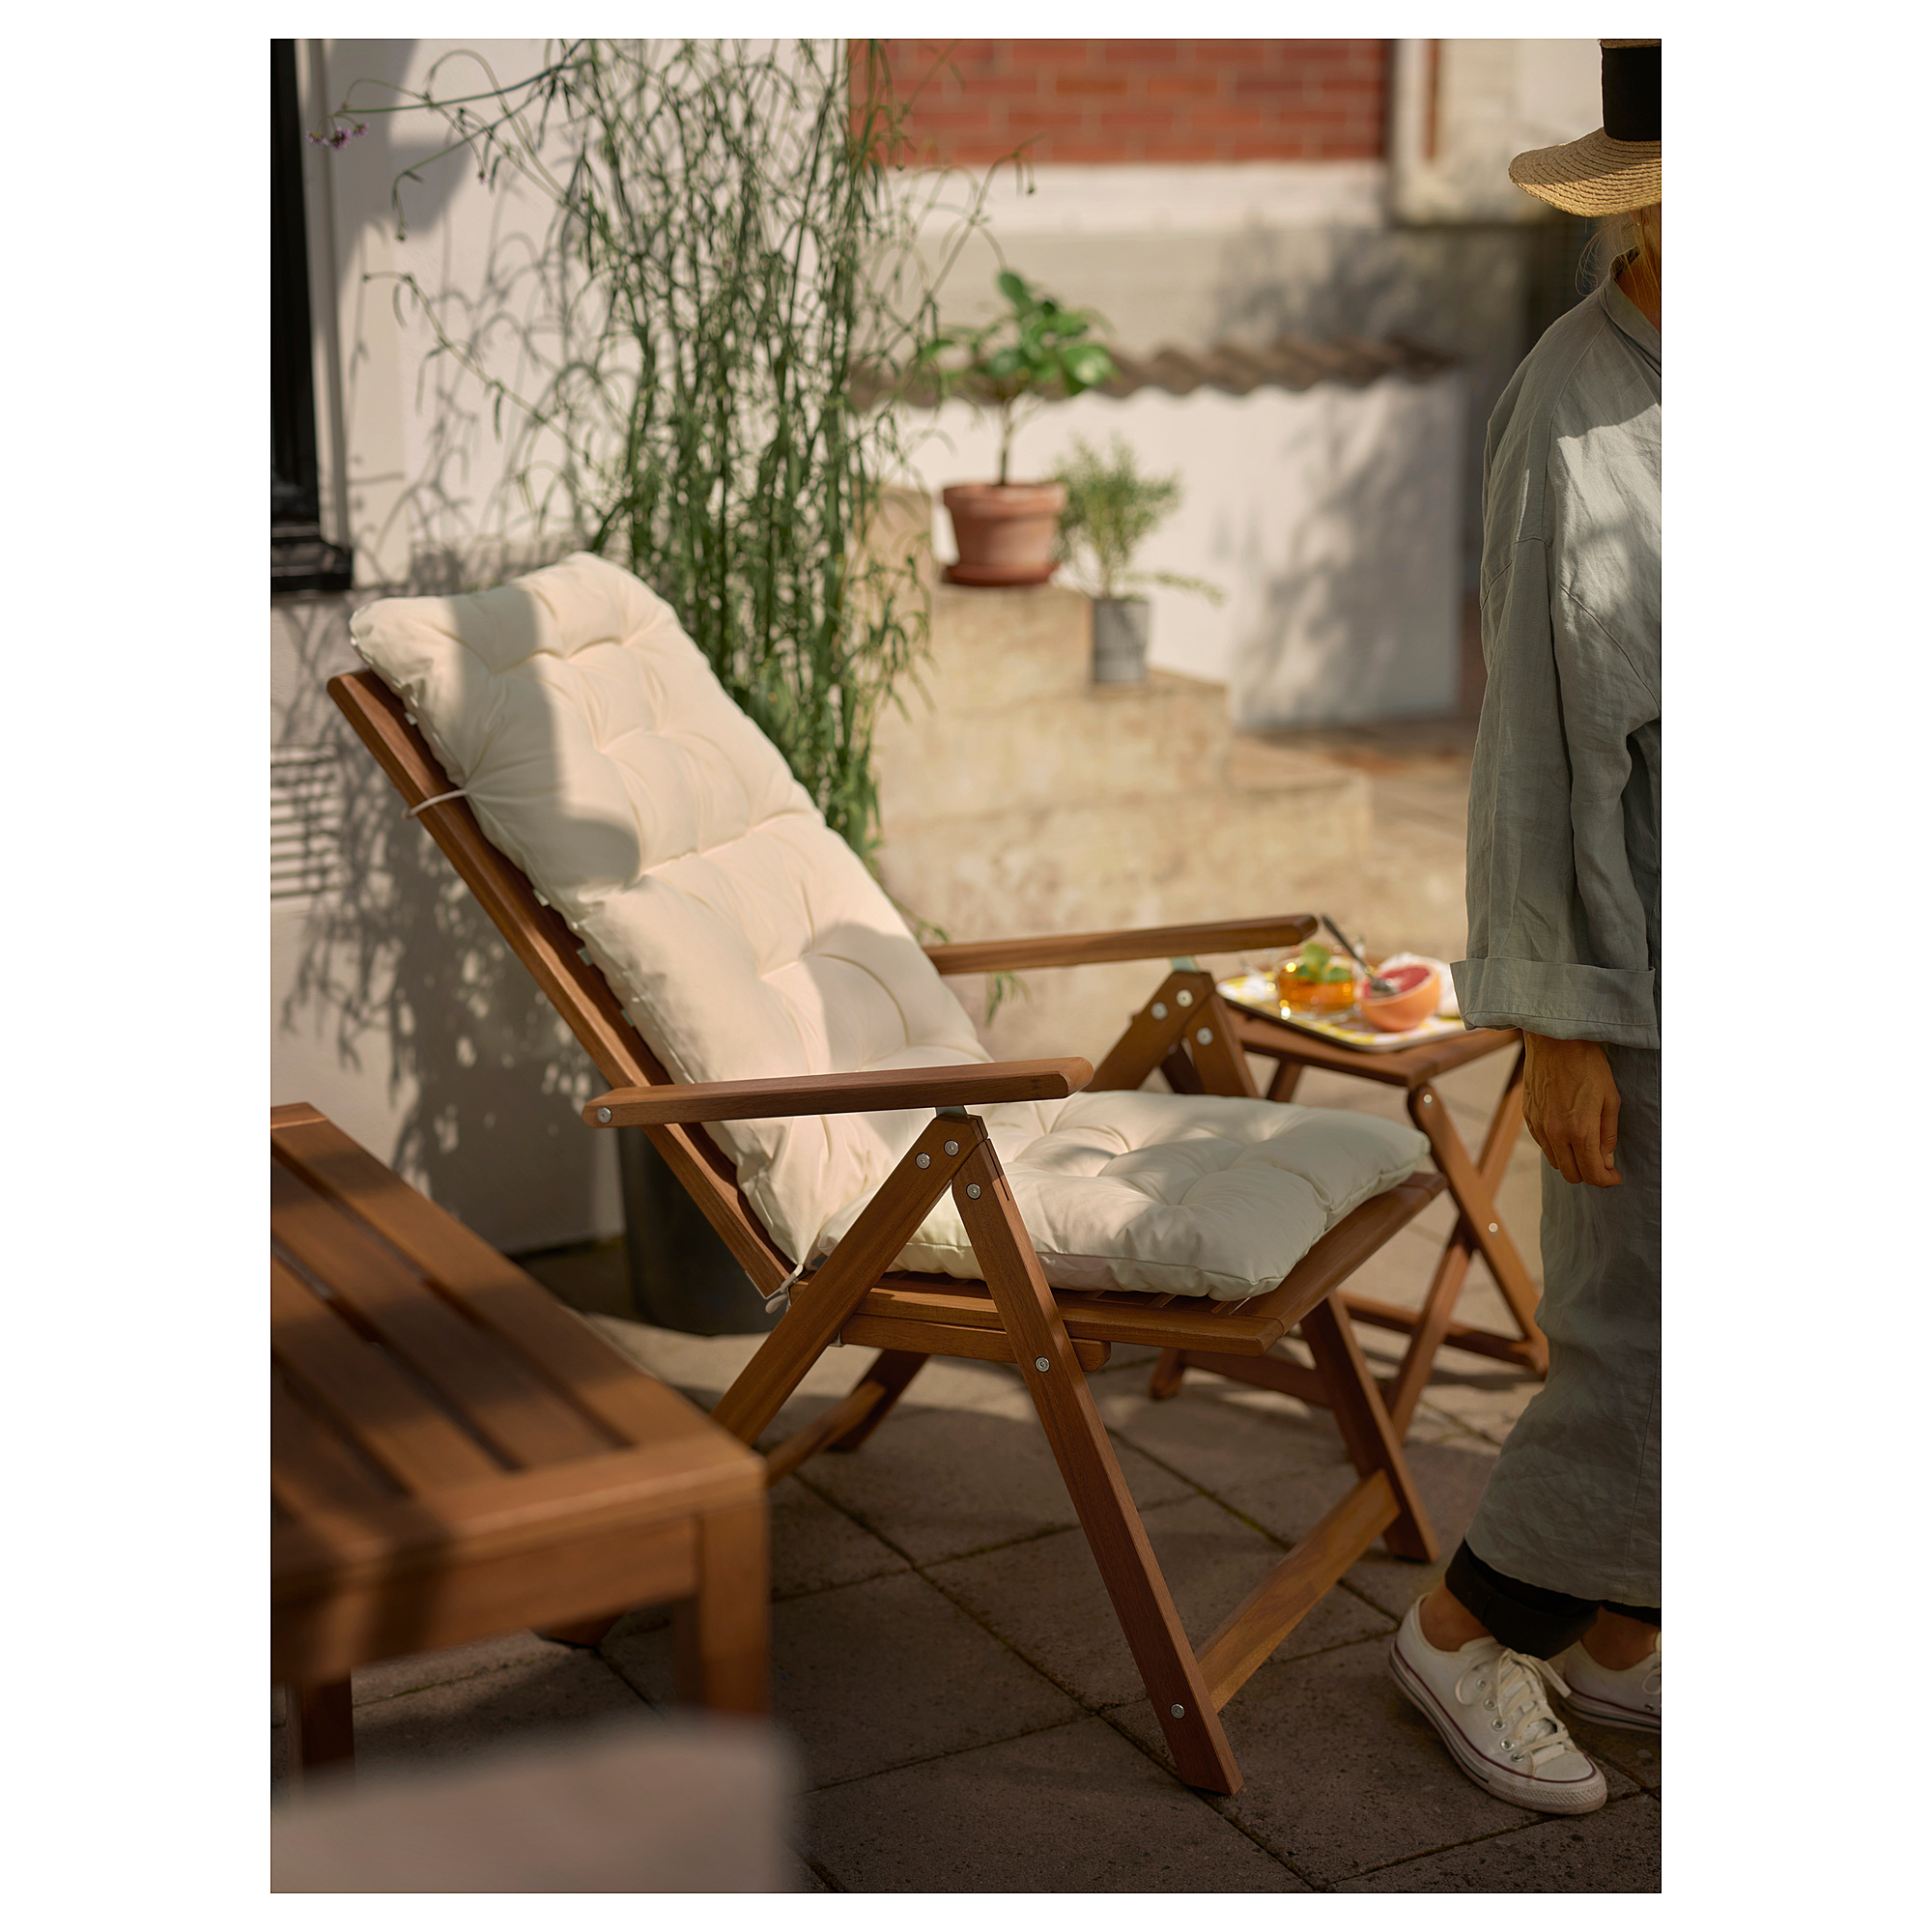 KUDDARNA seat/back cushion, outdoor